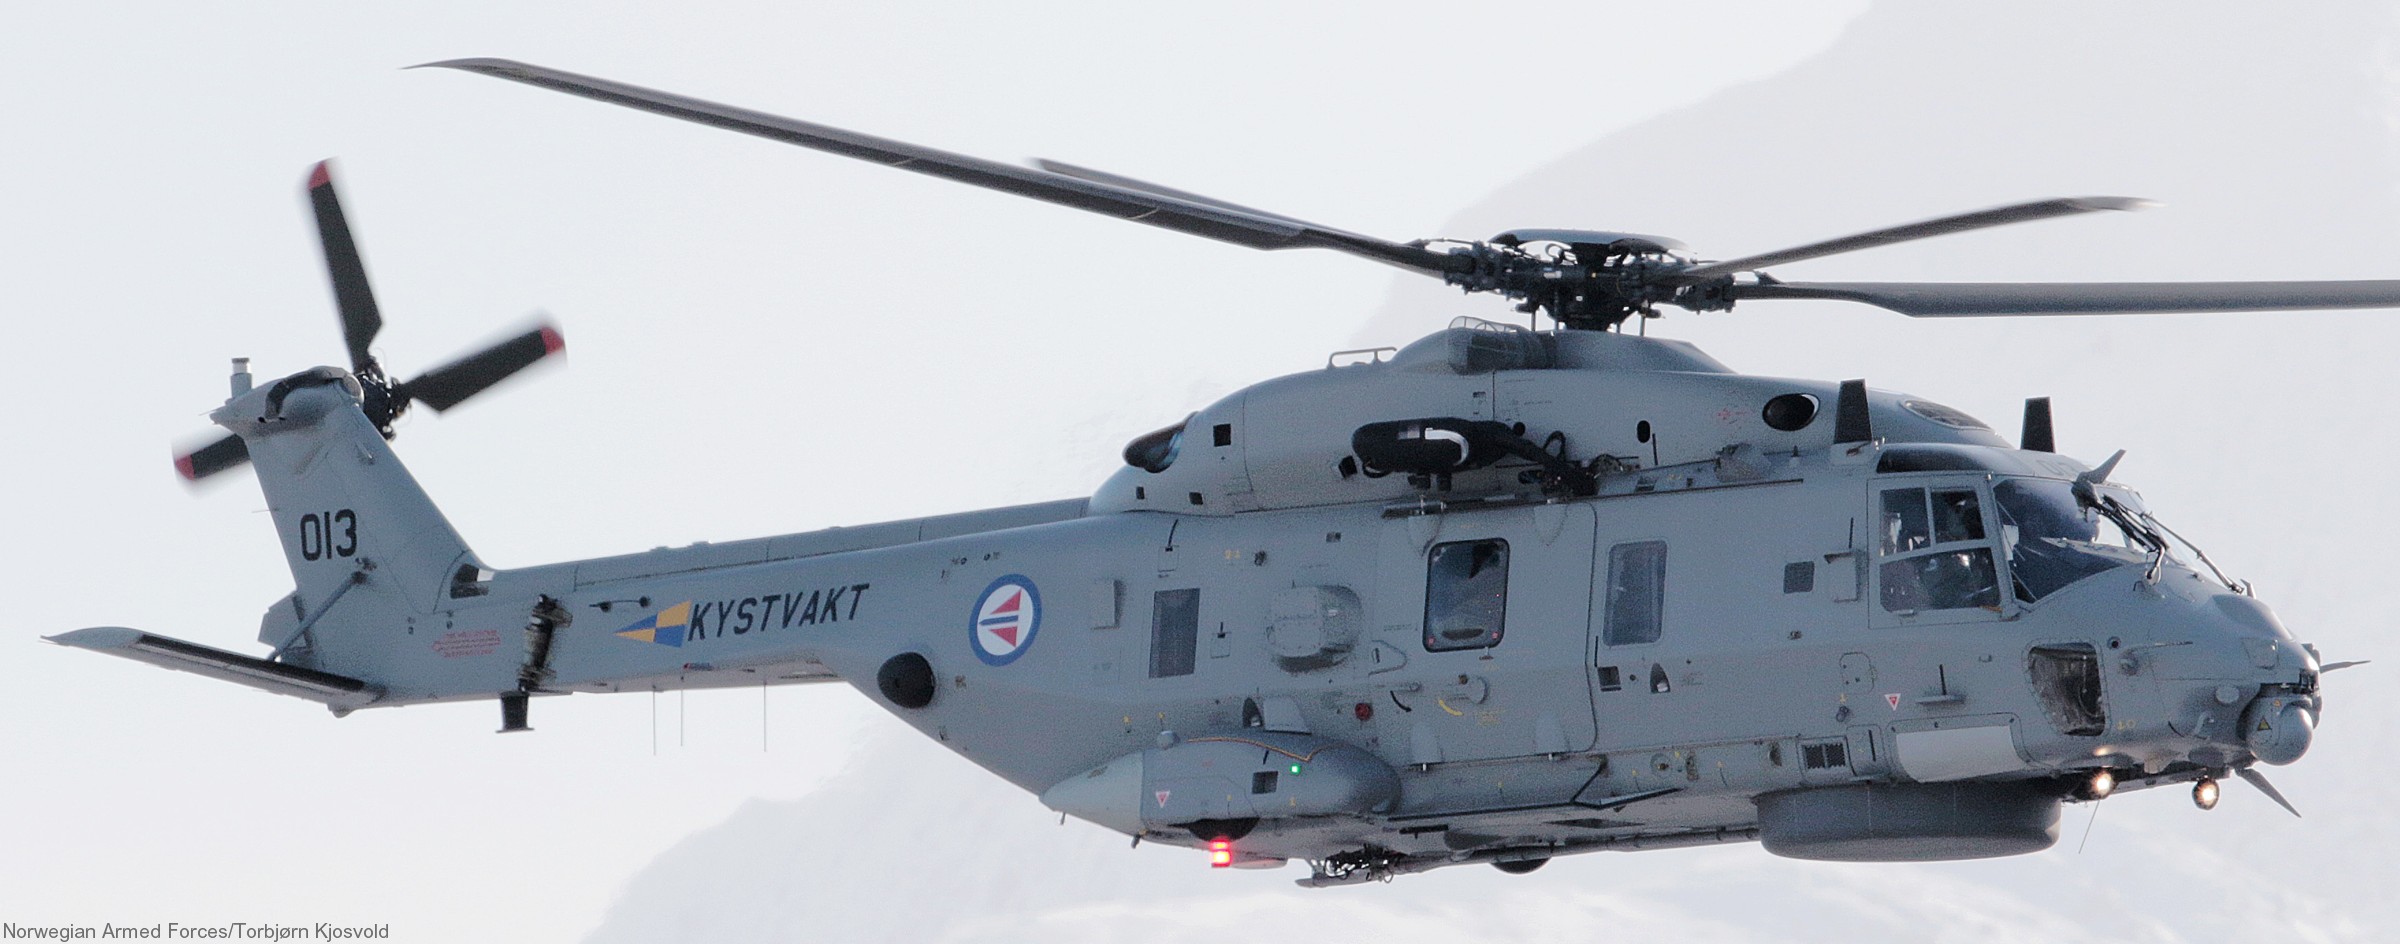 nh90 nfh asw helicopter royal norwegian coast guard navy air force kystvakt sjoforsvaret 013 02